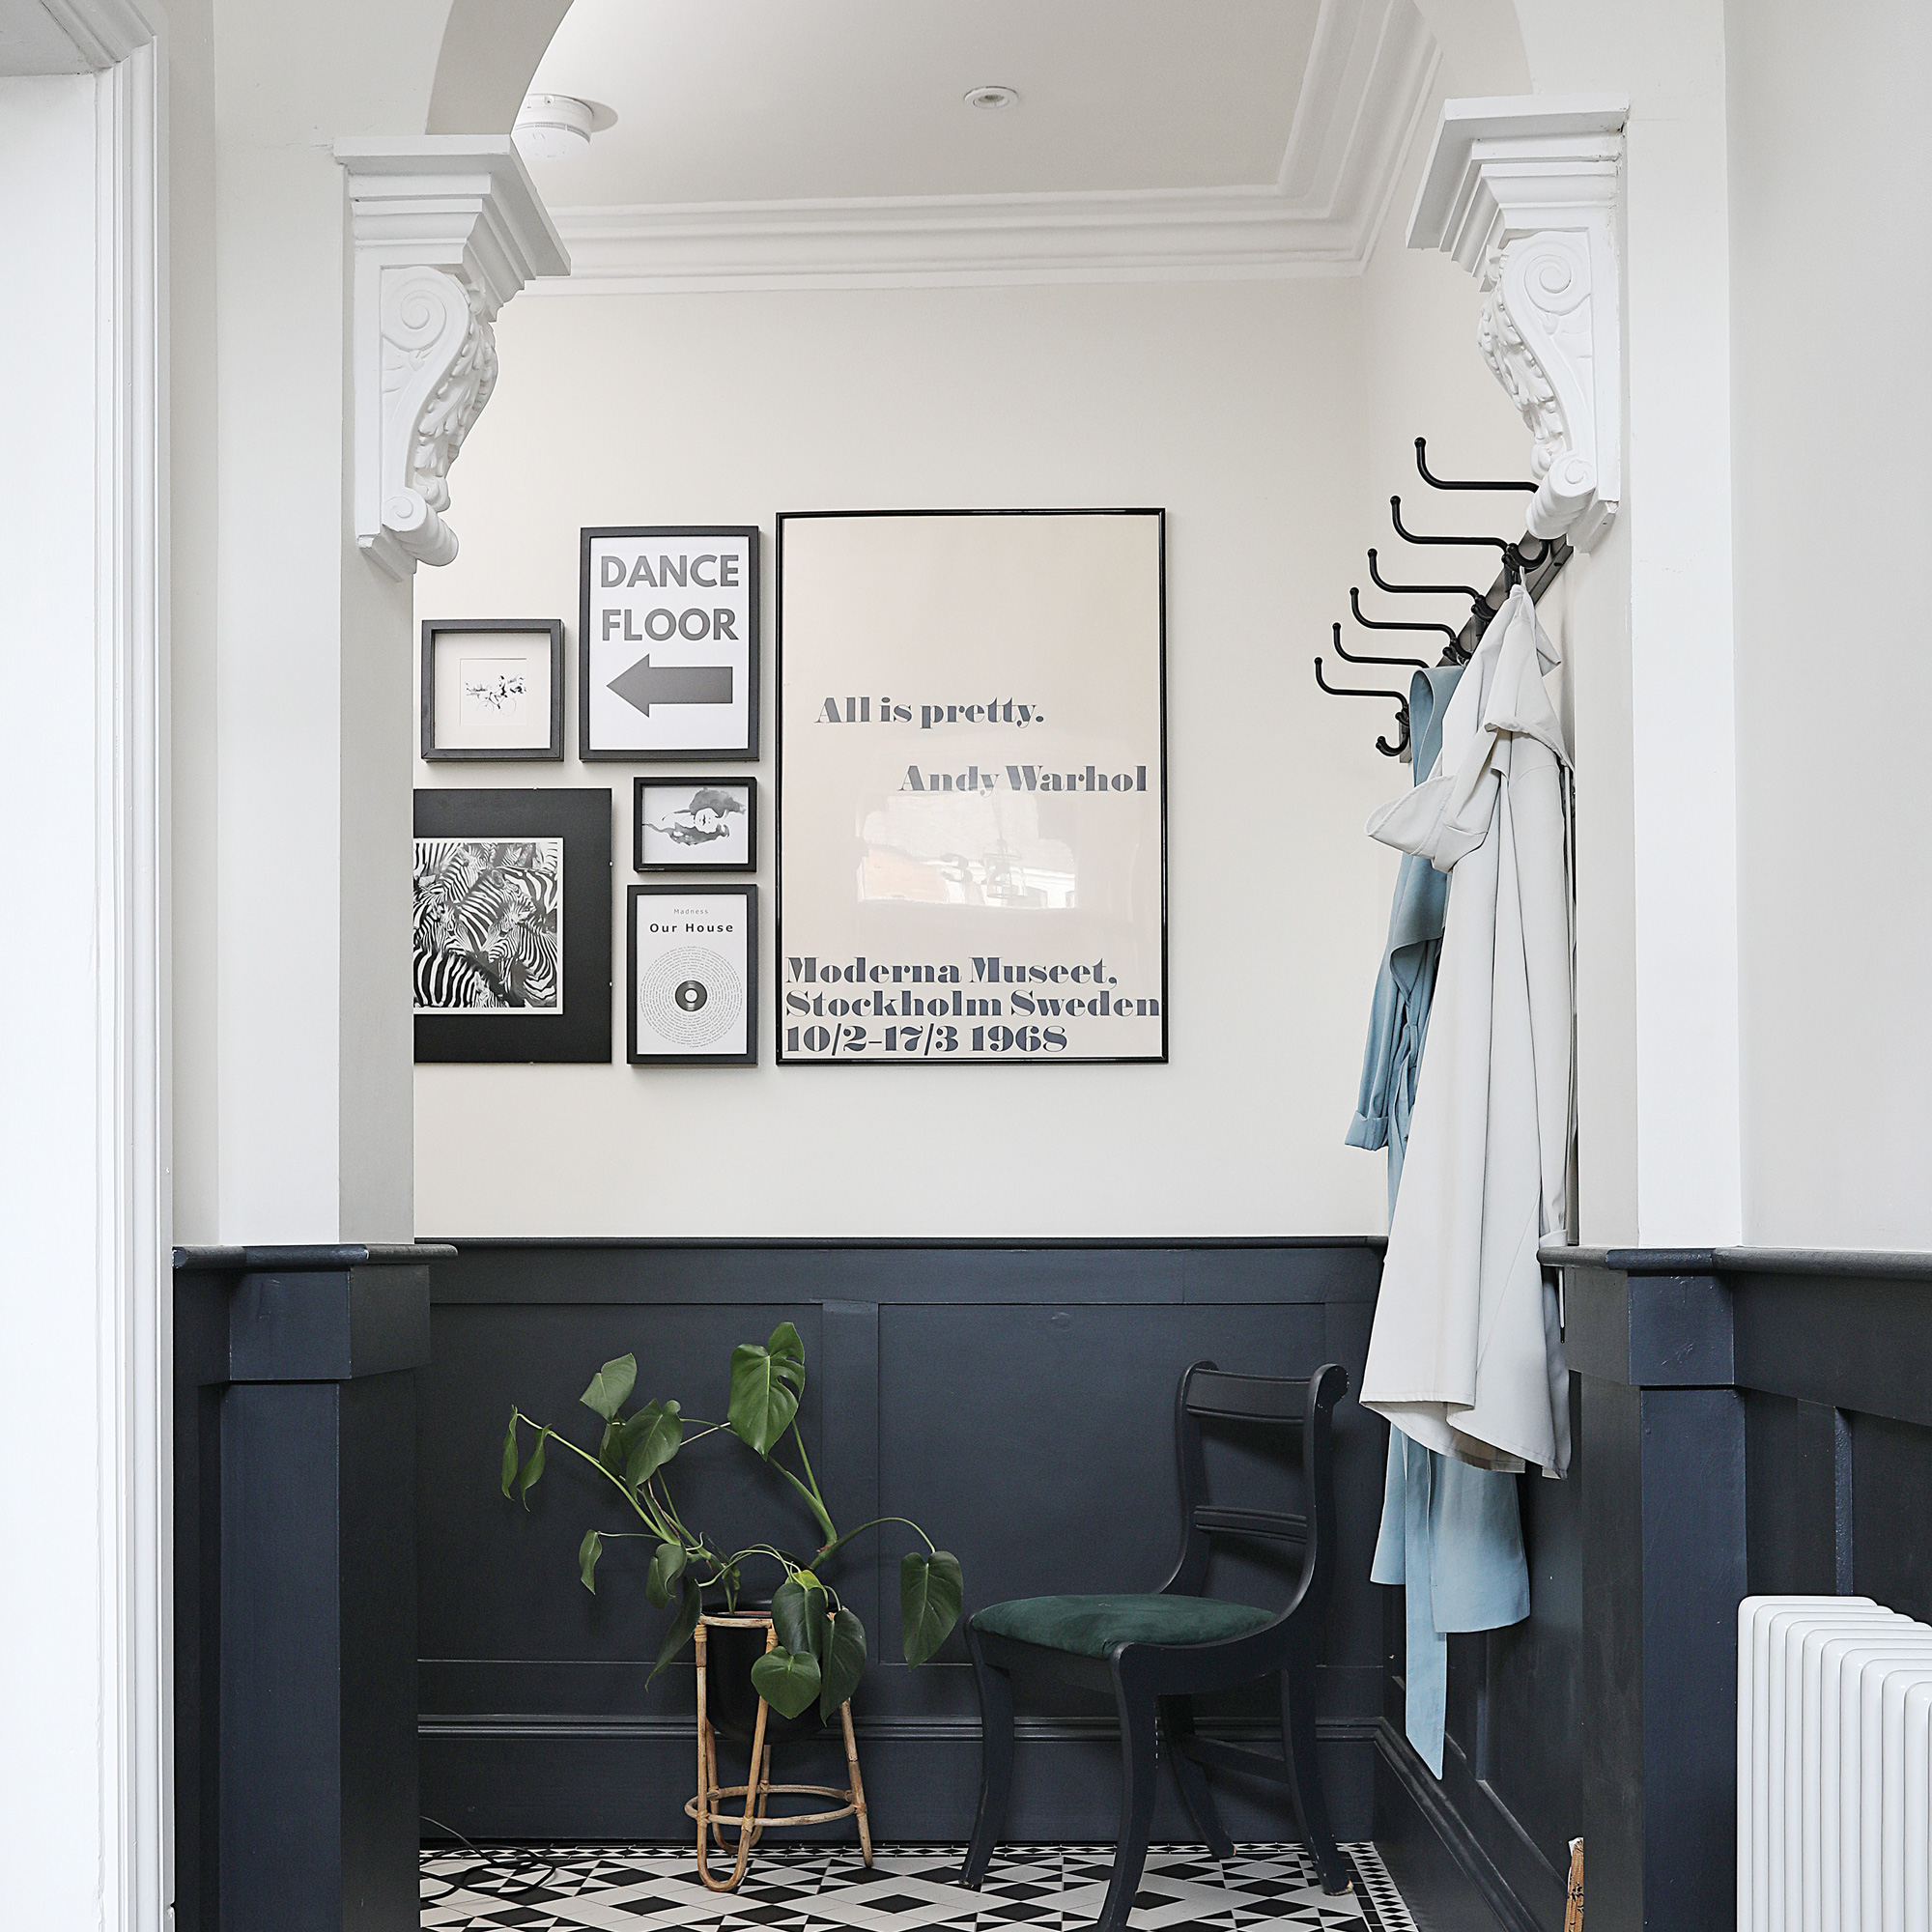 Victorian property revamp monochrome hallway